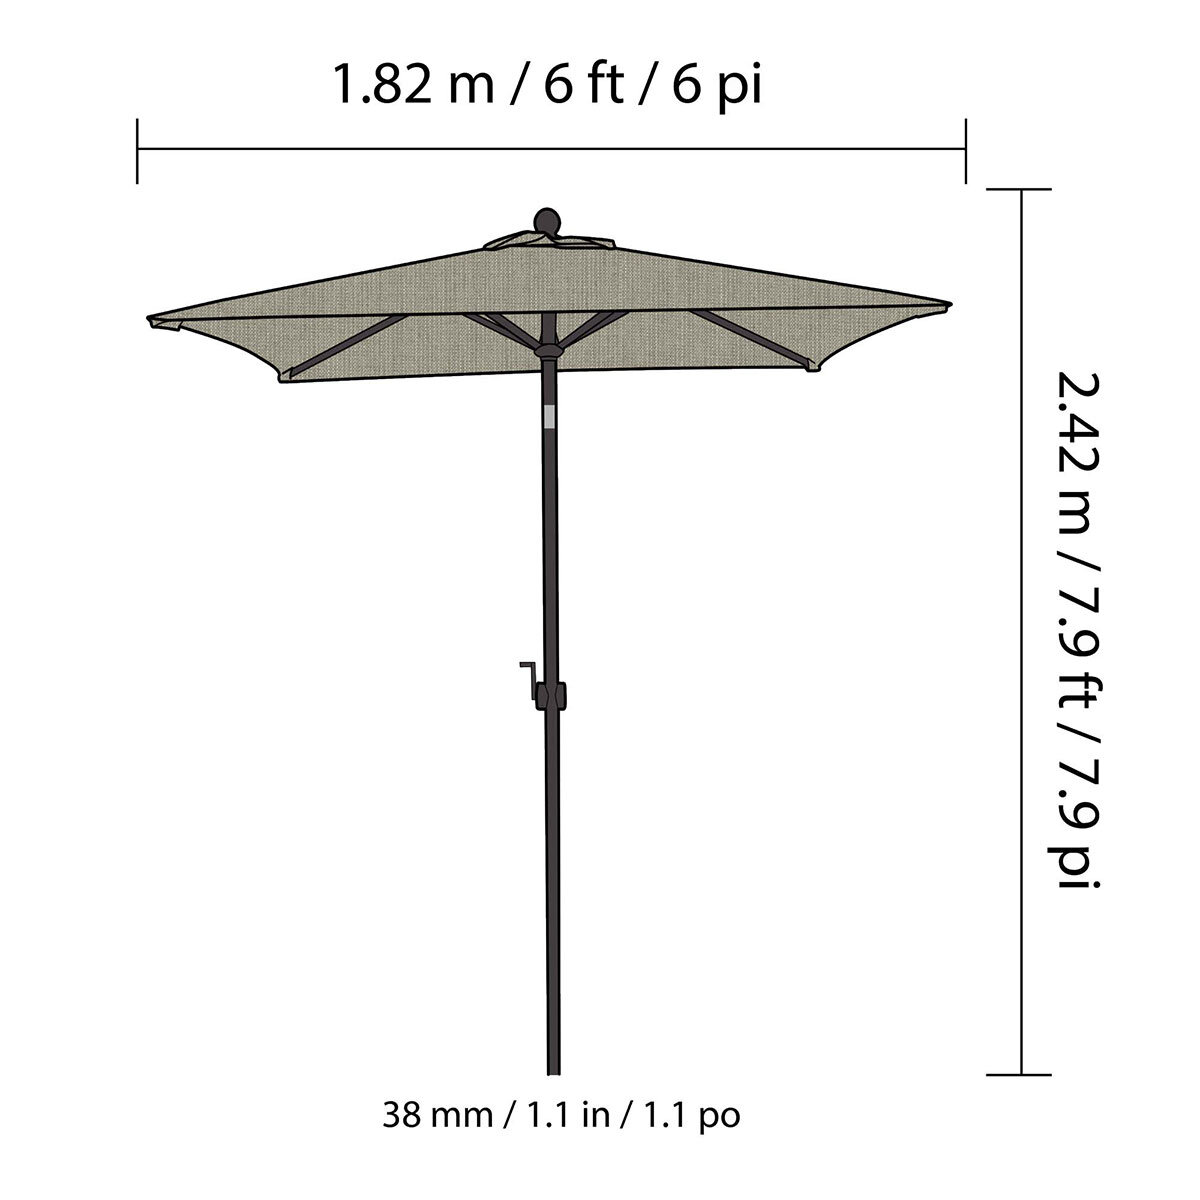 Seasons Sentry 6 x 6ft Square Market Umbrella in Dove